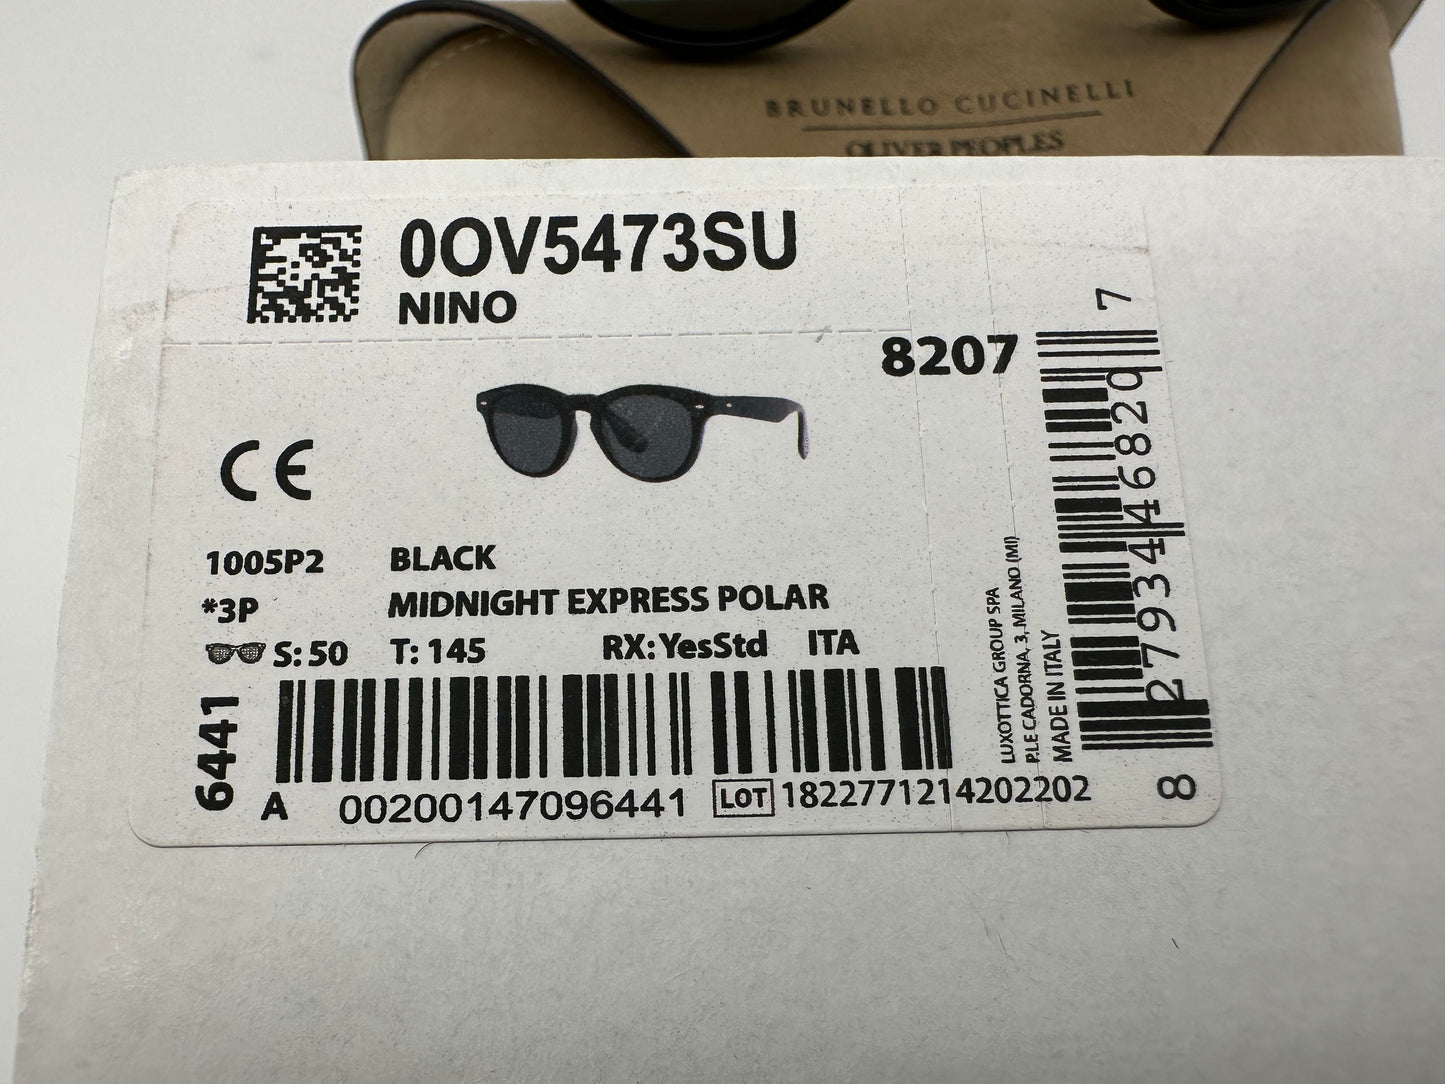 Oliver Peoples Nino Black Midnight Express Polar OV5473SU 1005P2 Nino 50mm Brunello Cucinelli Sunglasses